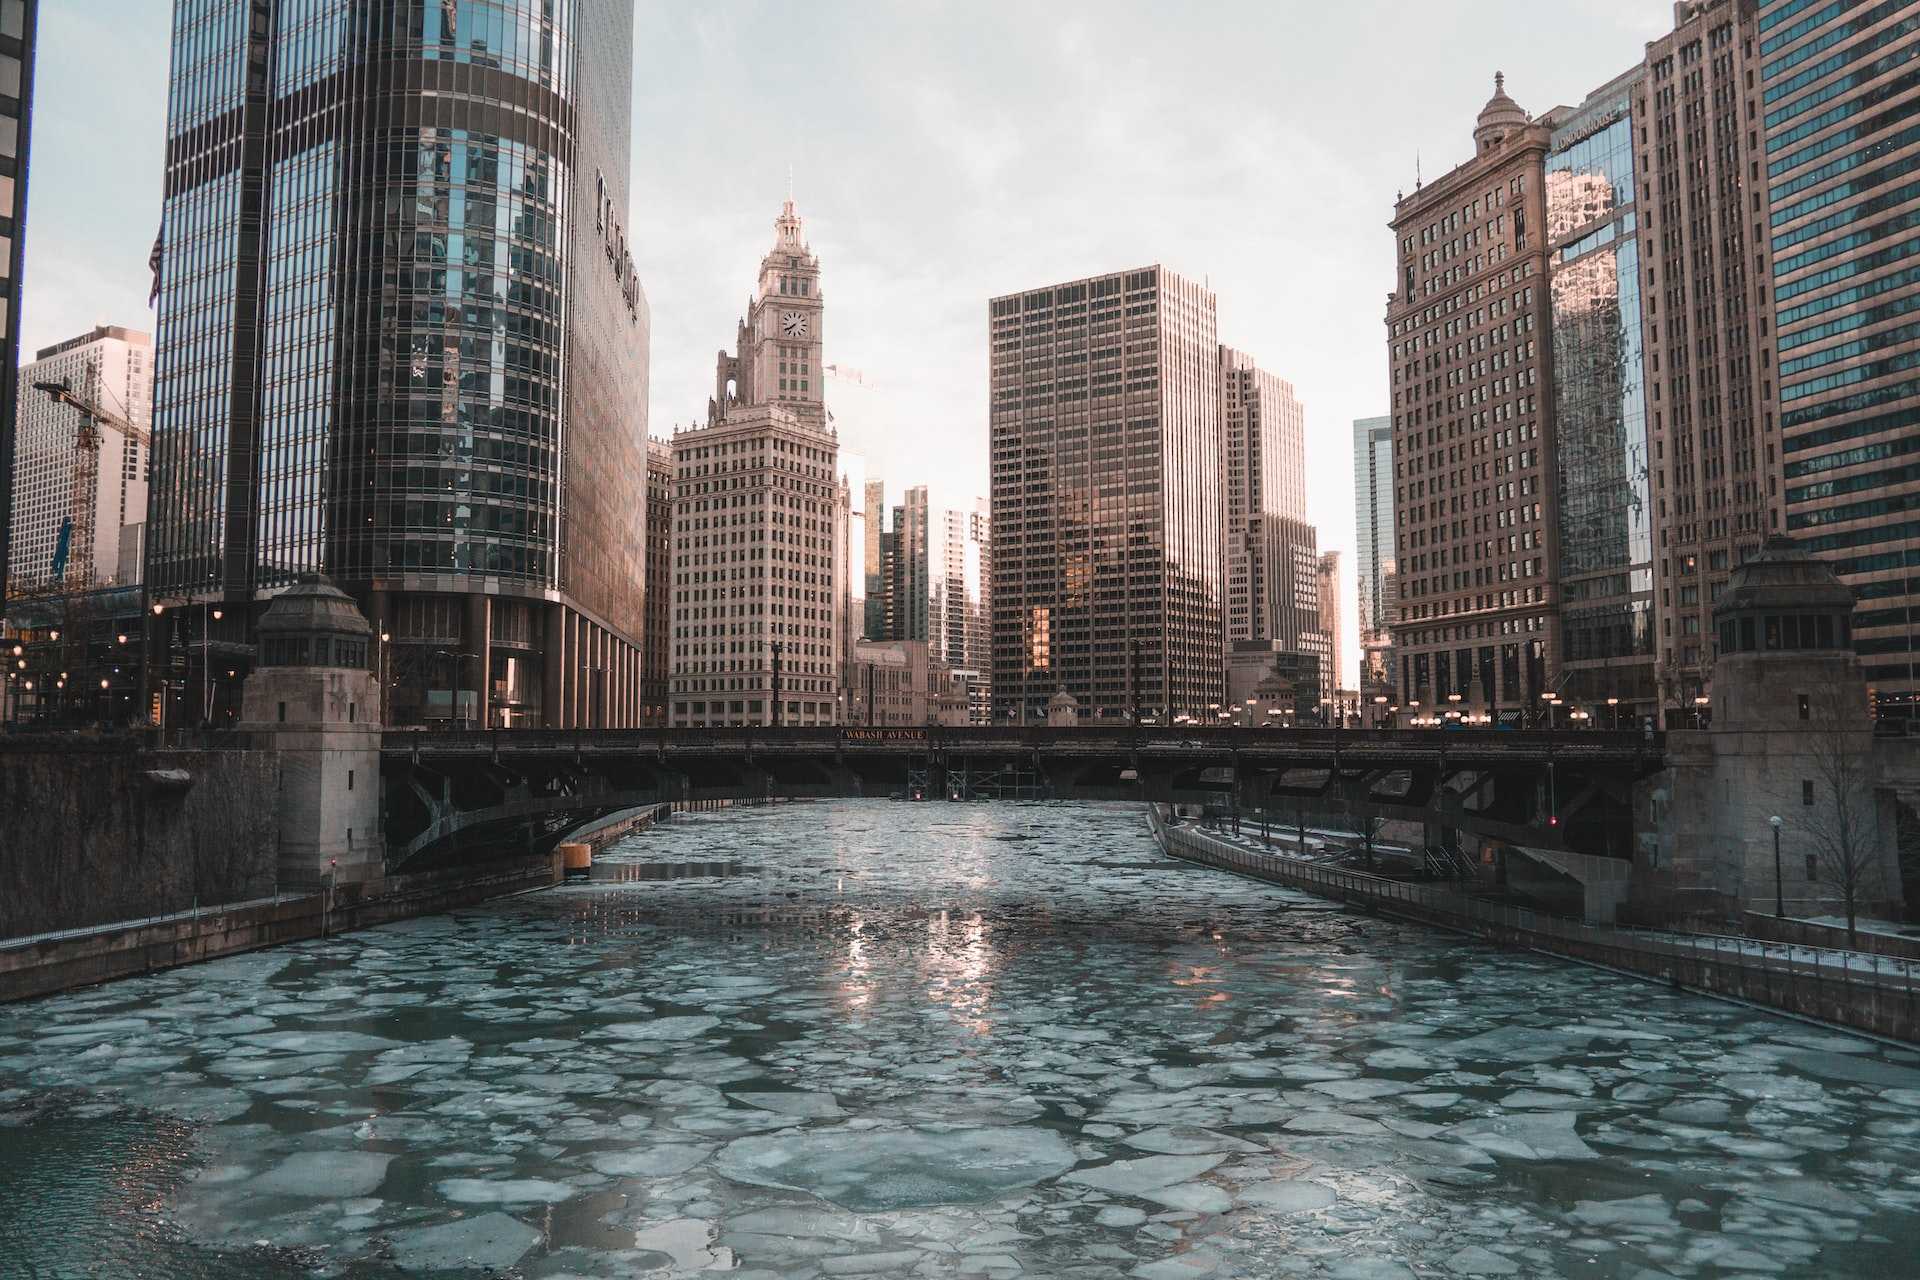 frozen water under a bridge in the city